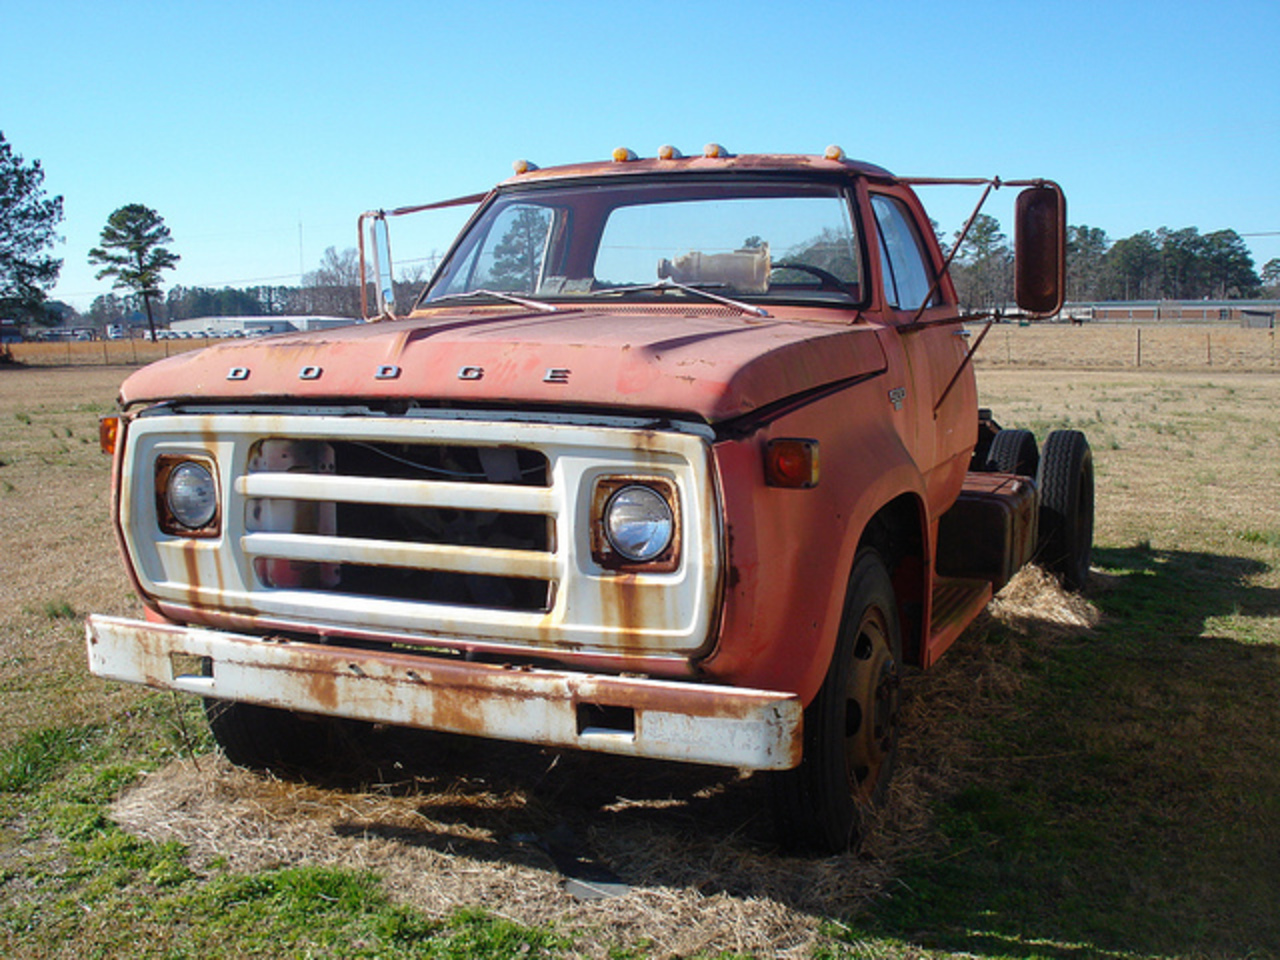 Flickr: The Rusty / Forgotten Dodge Trucks Pool